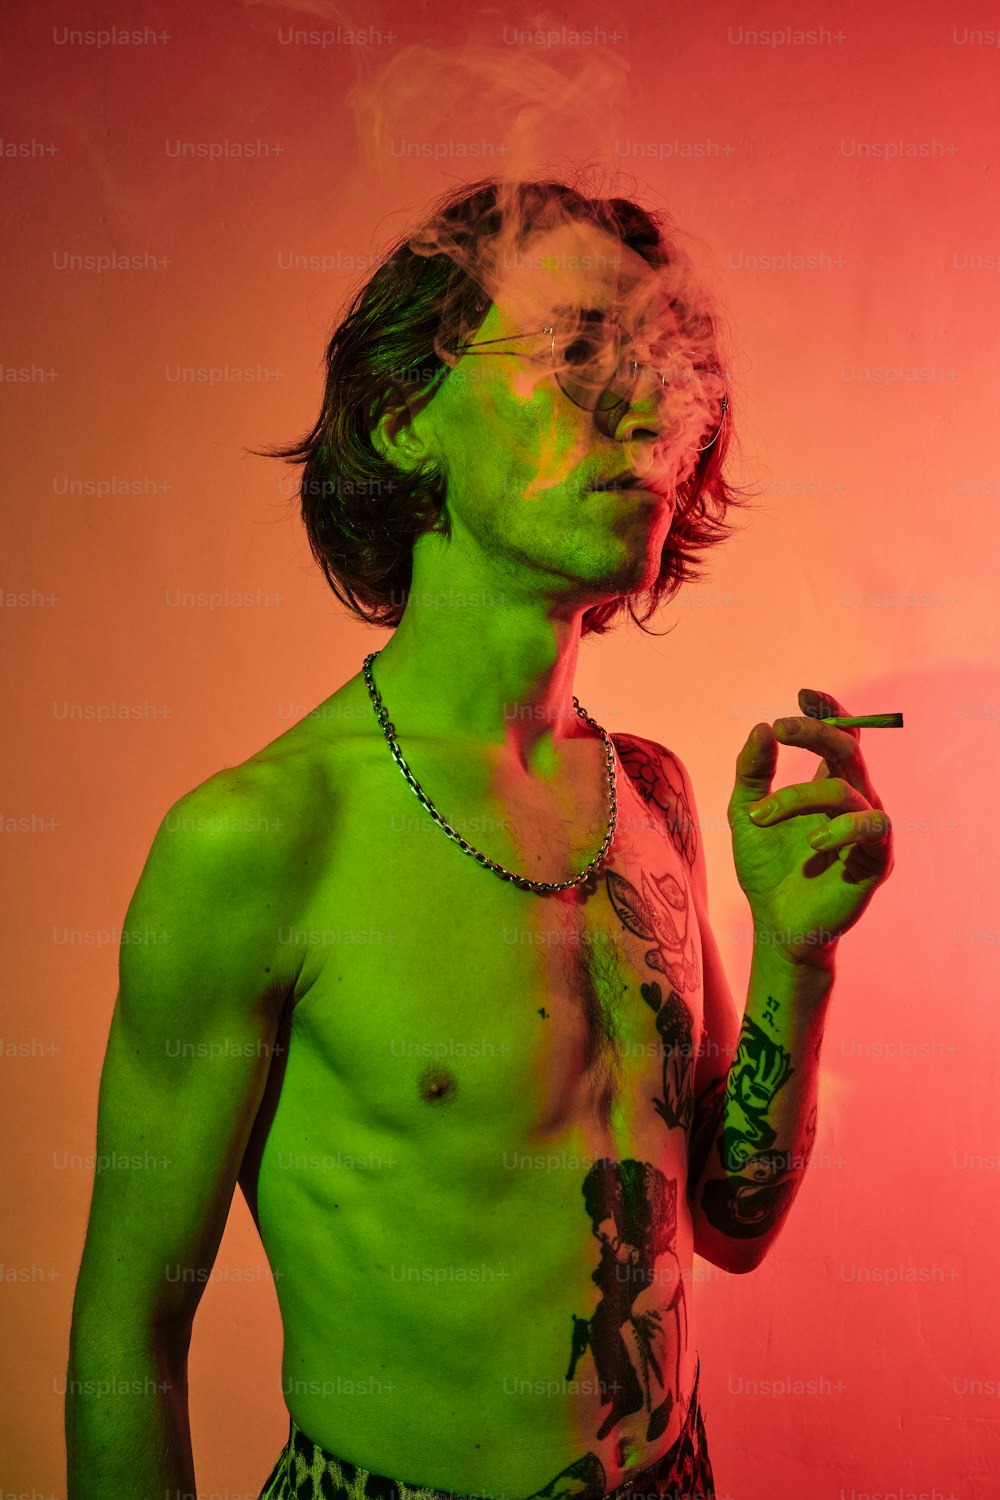 a man smoking a cigarette in a green shirt